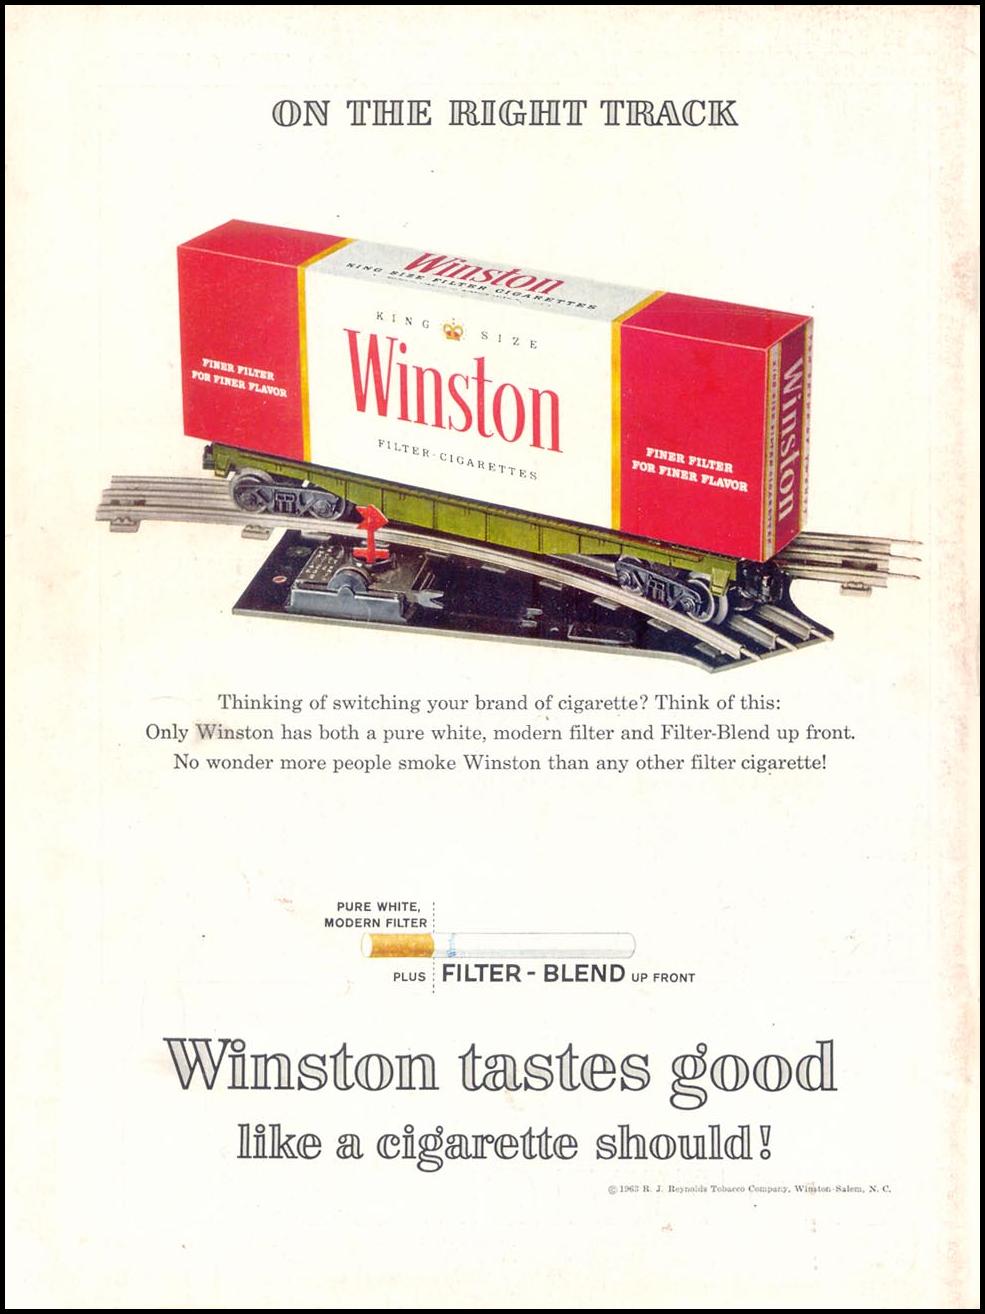 WINSTON CIGARETTES
TIME
05/03/1963
BACK COVER